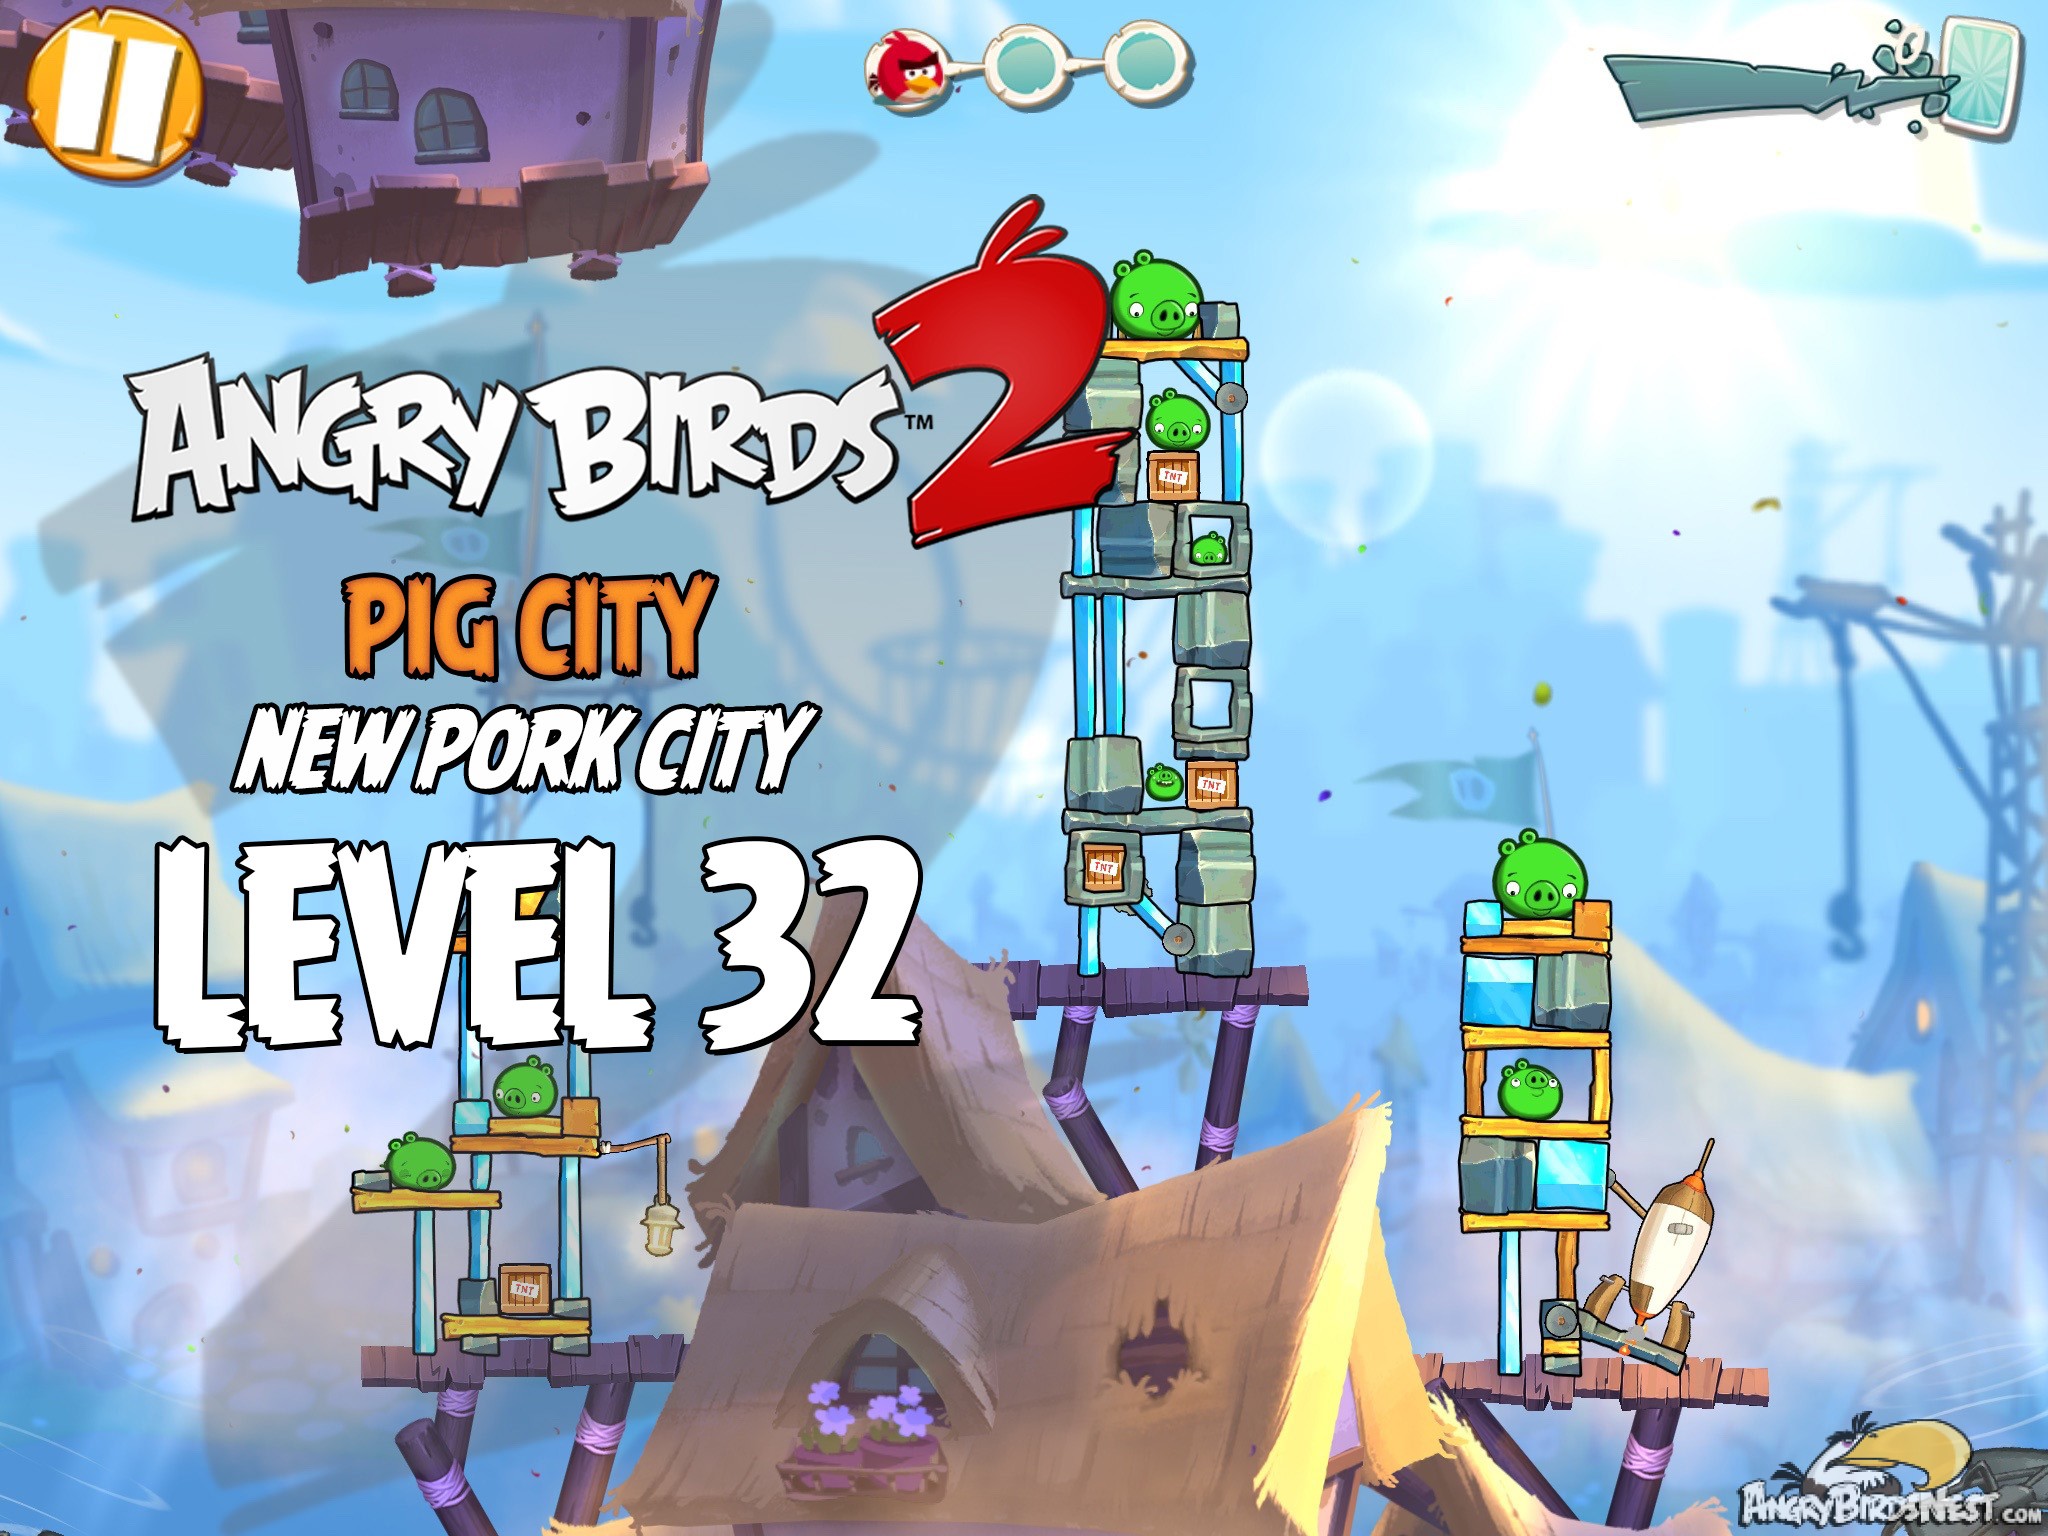 angry-birds-2-level-32-pig-city-new-pork-city-3-star-walkthrough-angrybirdsnest